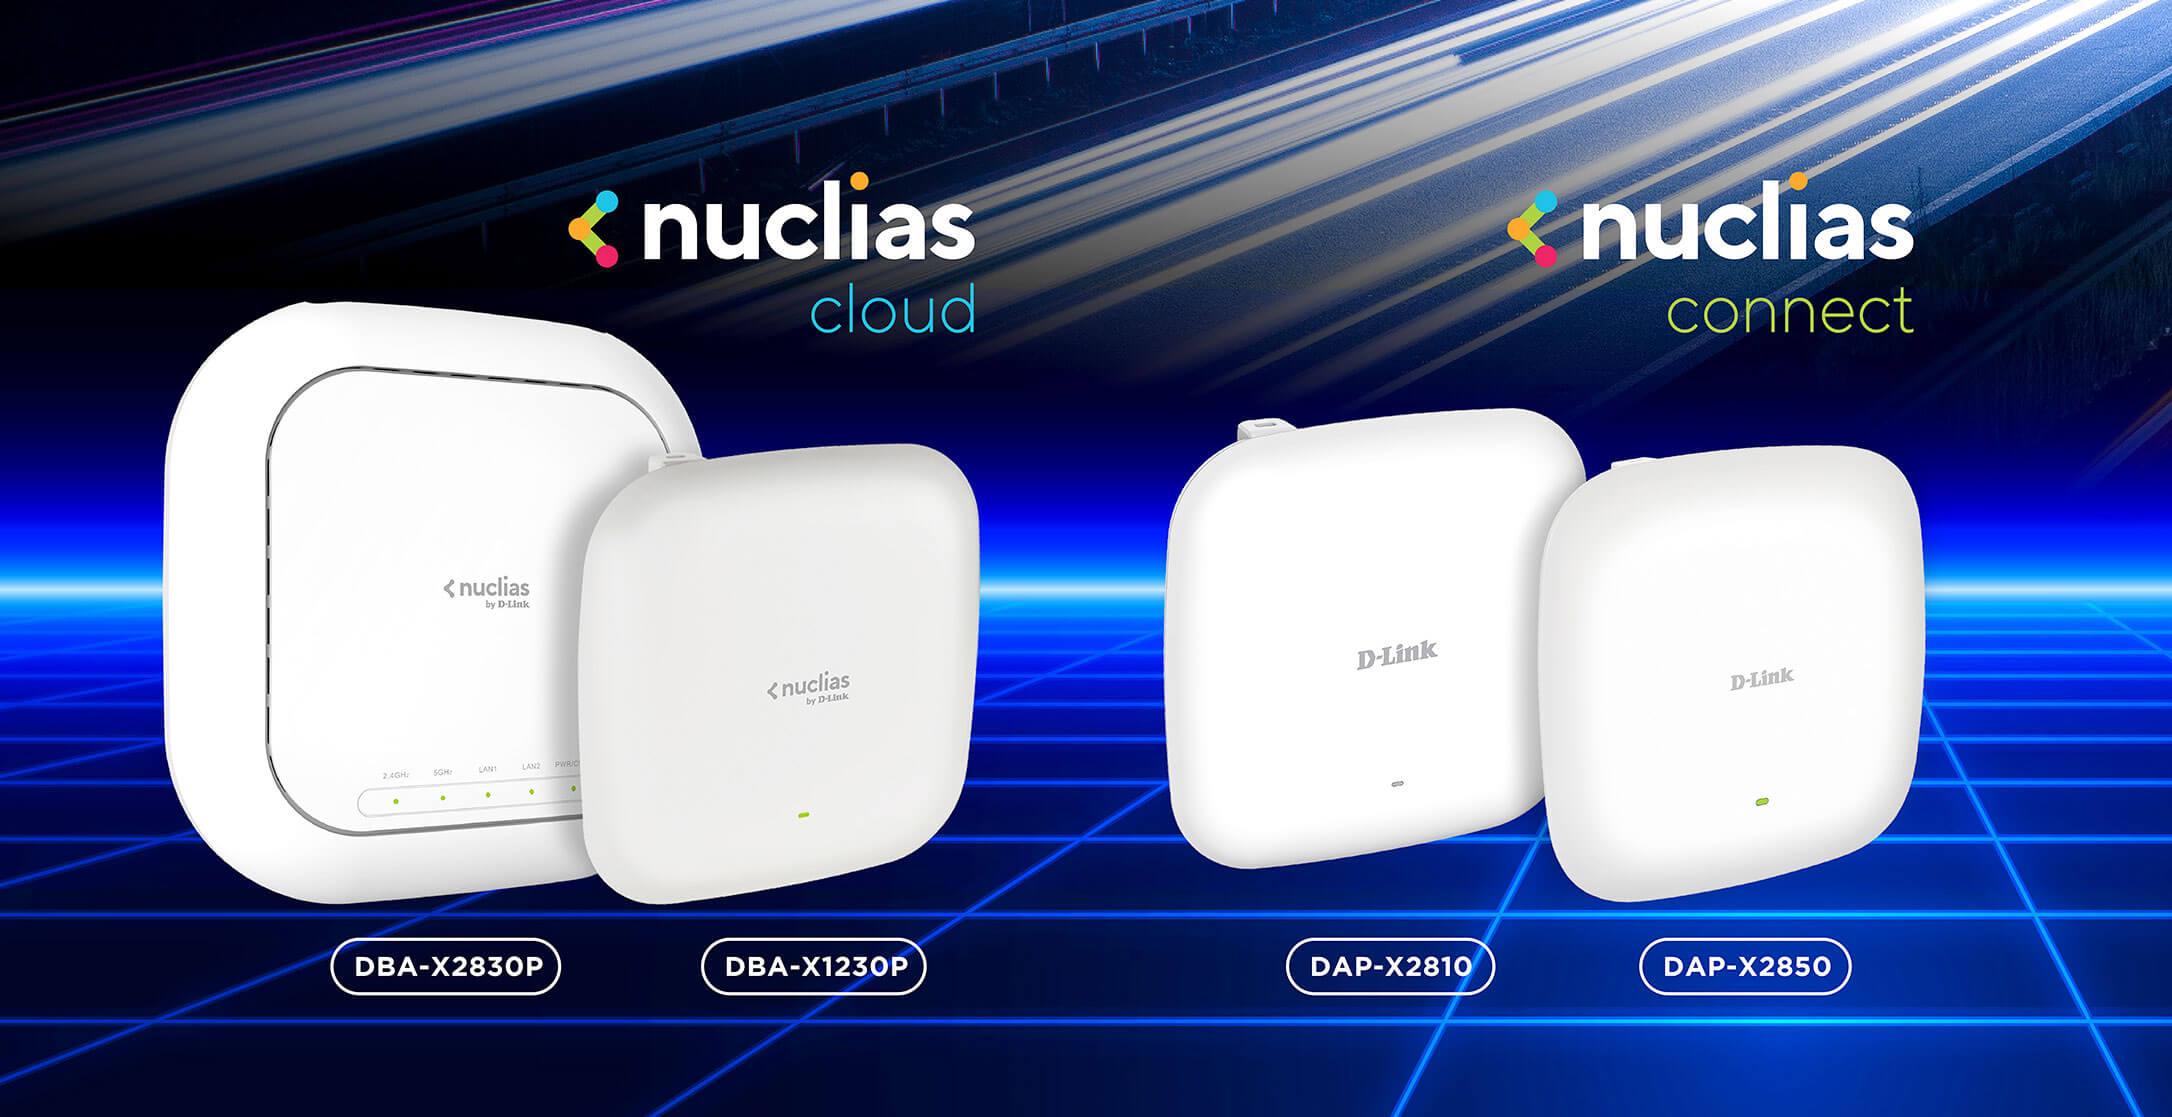 New Nuclias Cloud access points: DBA-X2830P, DBA-X1230P, and new Nuclias Connect access points: DAP-X2810, DAP-X2850.